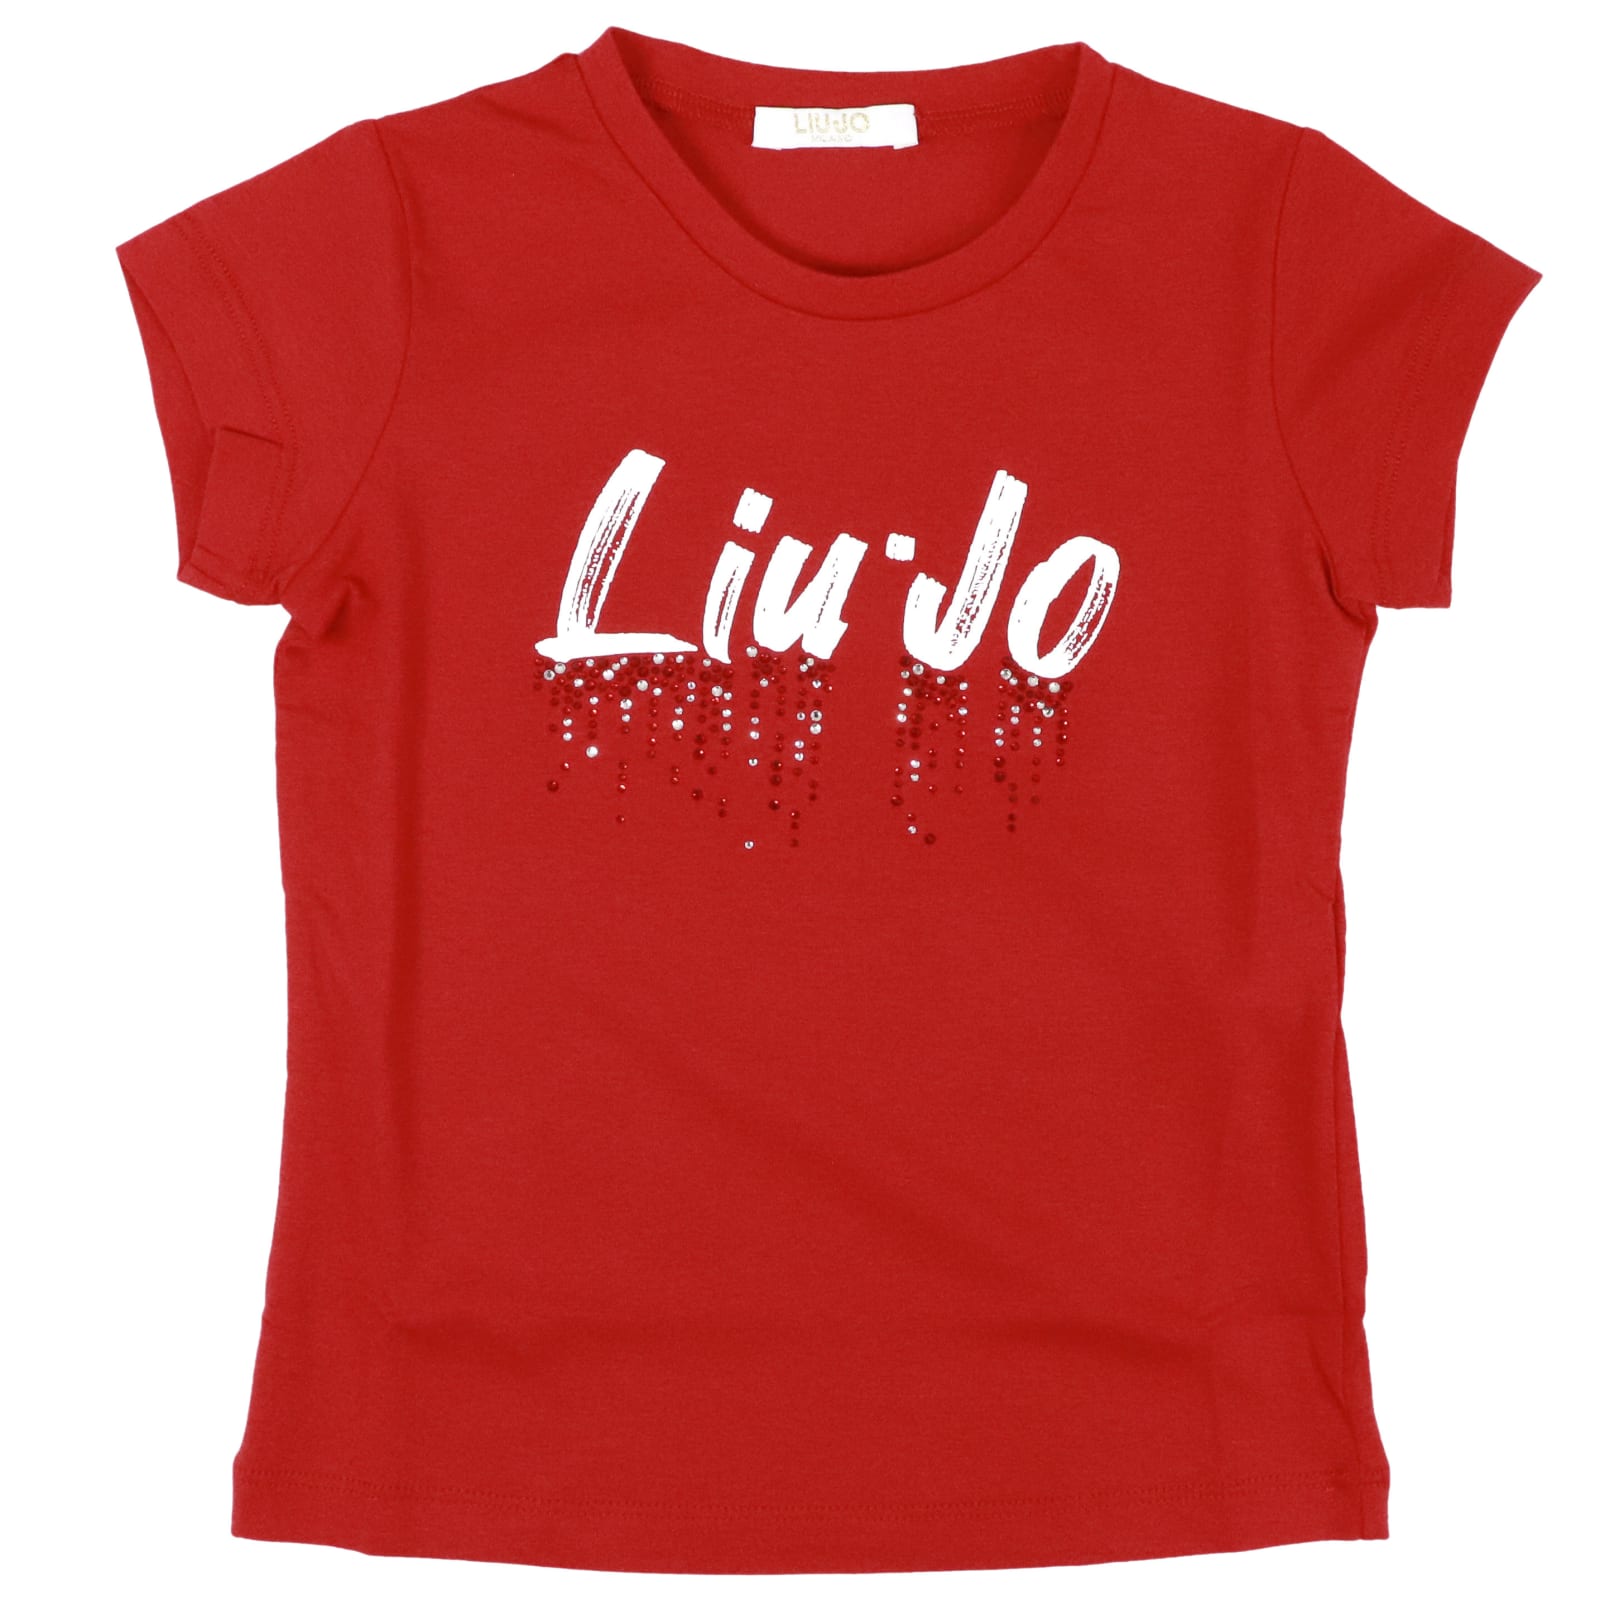 Liu •jo Kids' Cotton T-shirt In Red